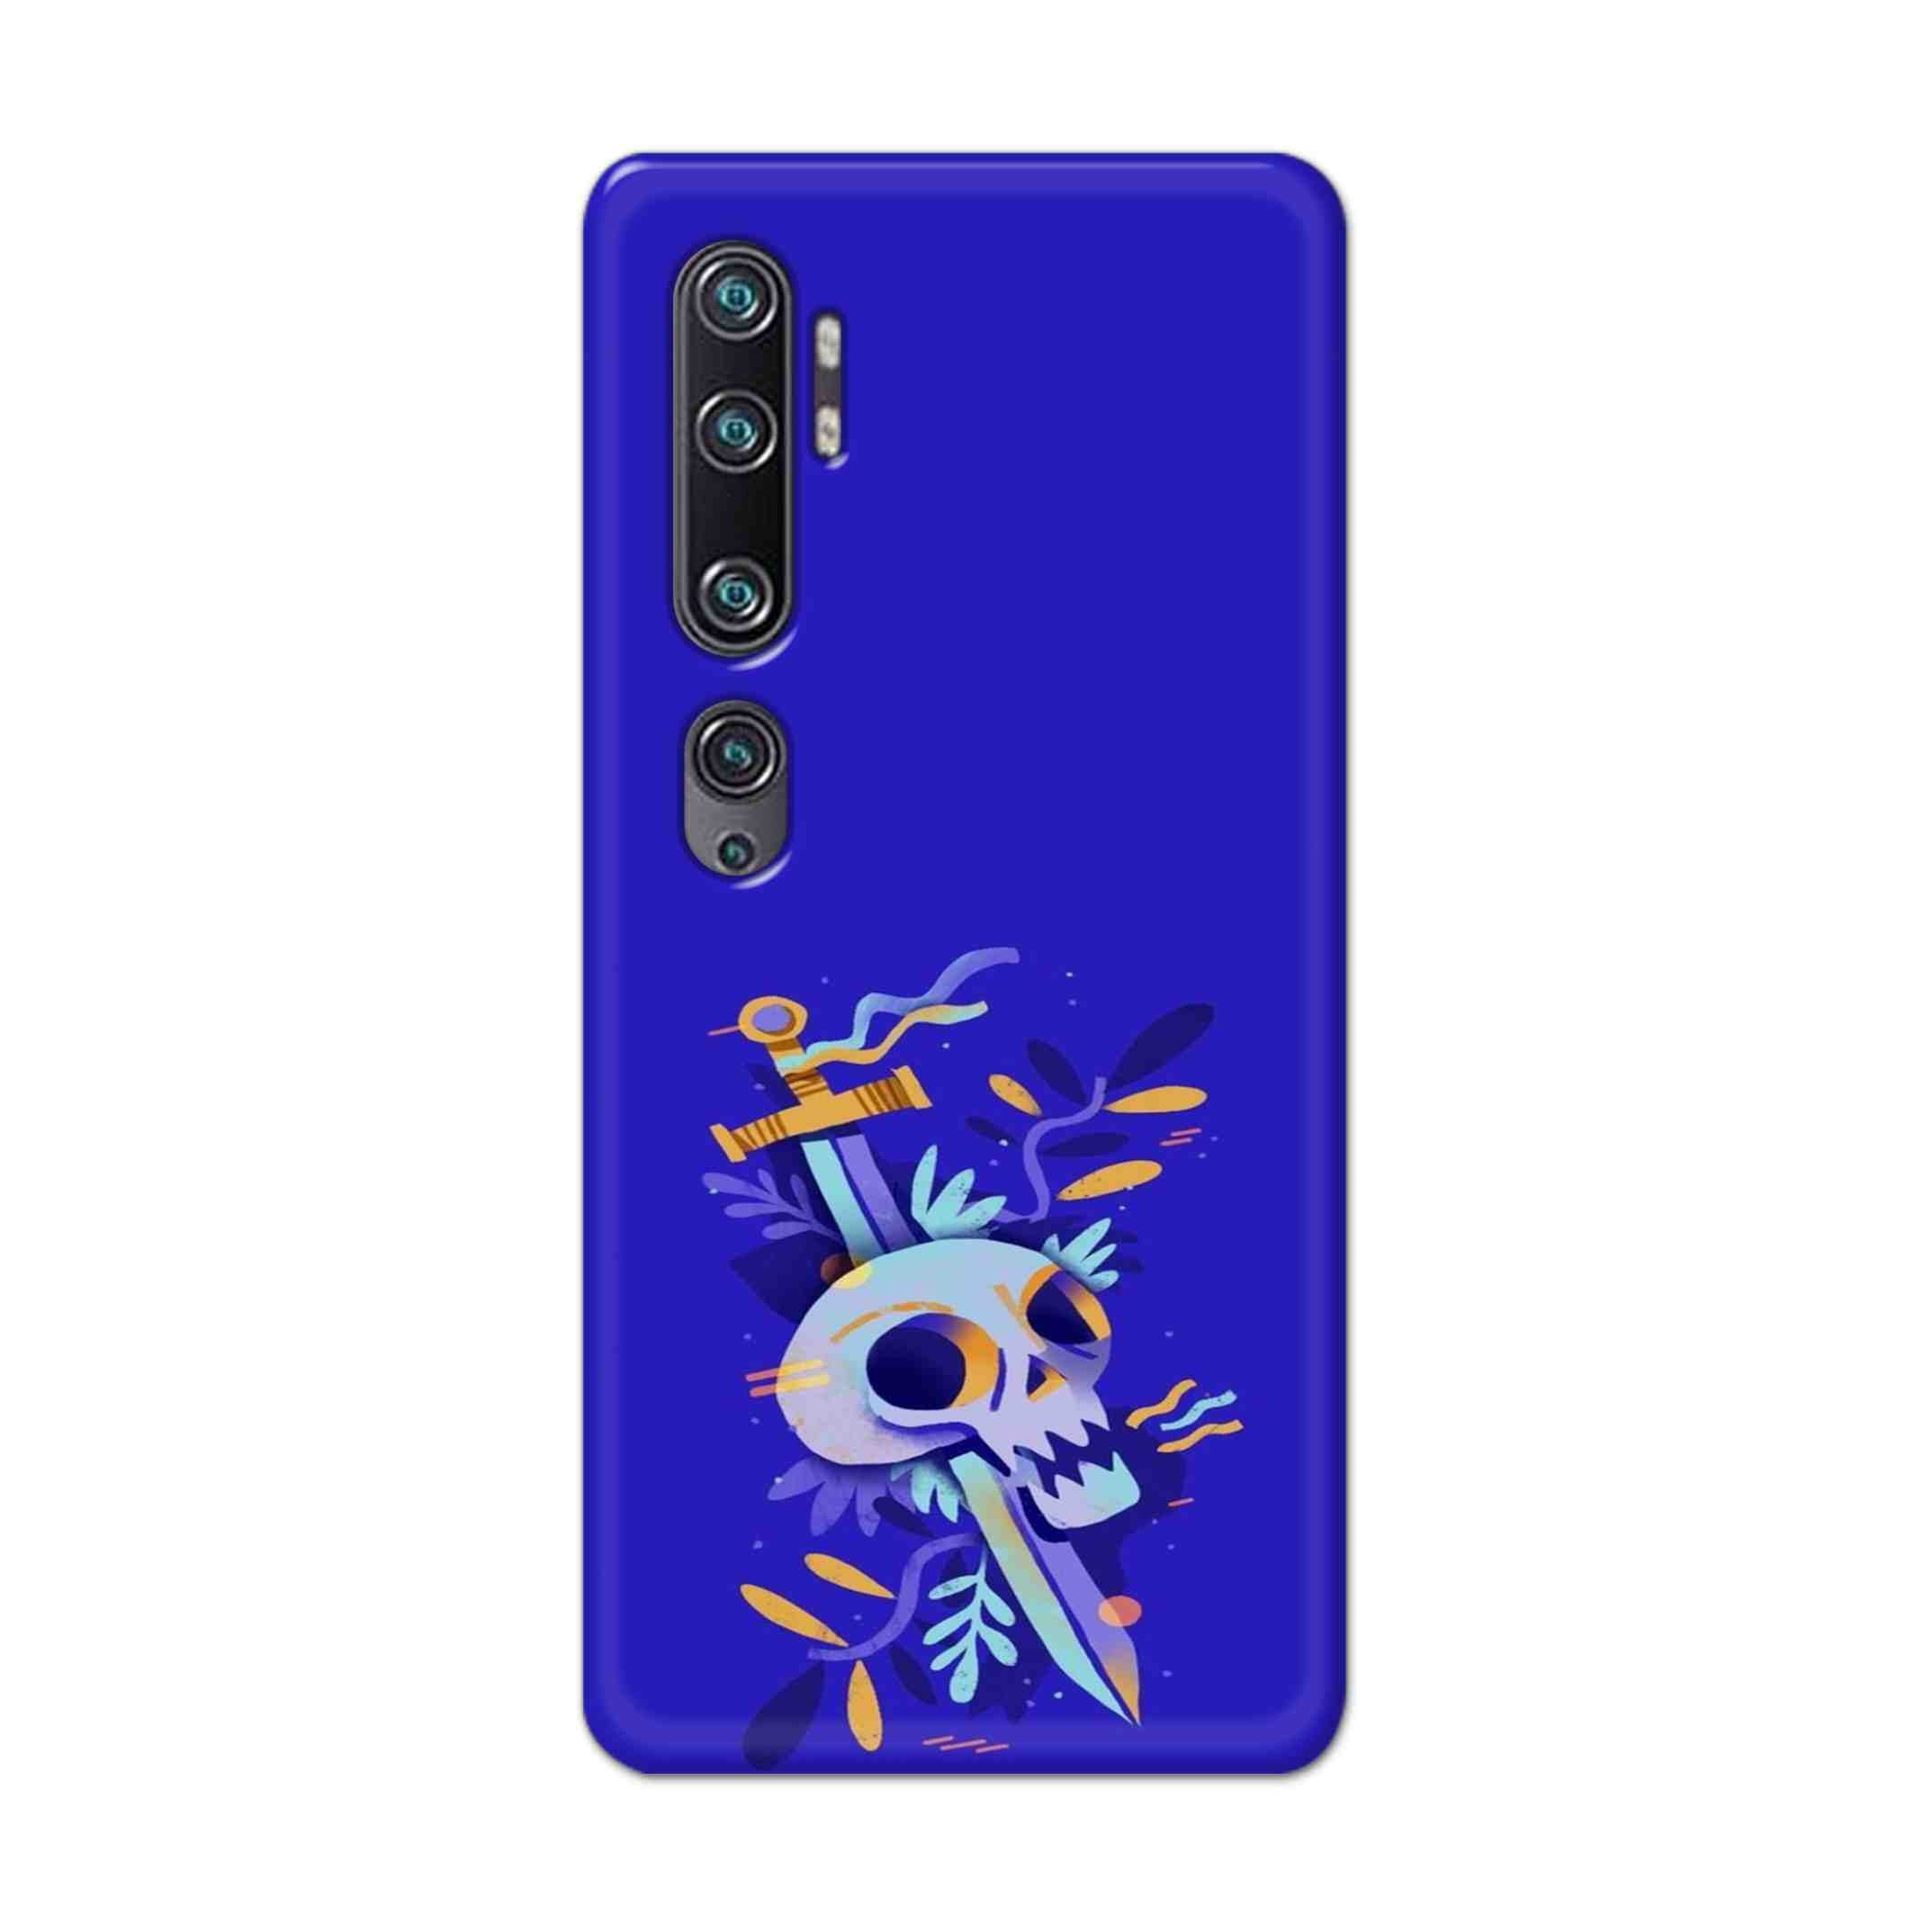 Buy Blue Skull Hard Back Mobile Phone Case Cover For Xiaomi Mi Note 10 Online